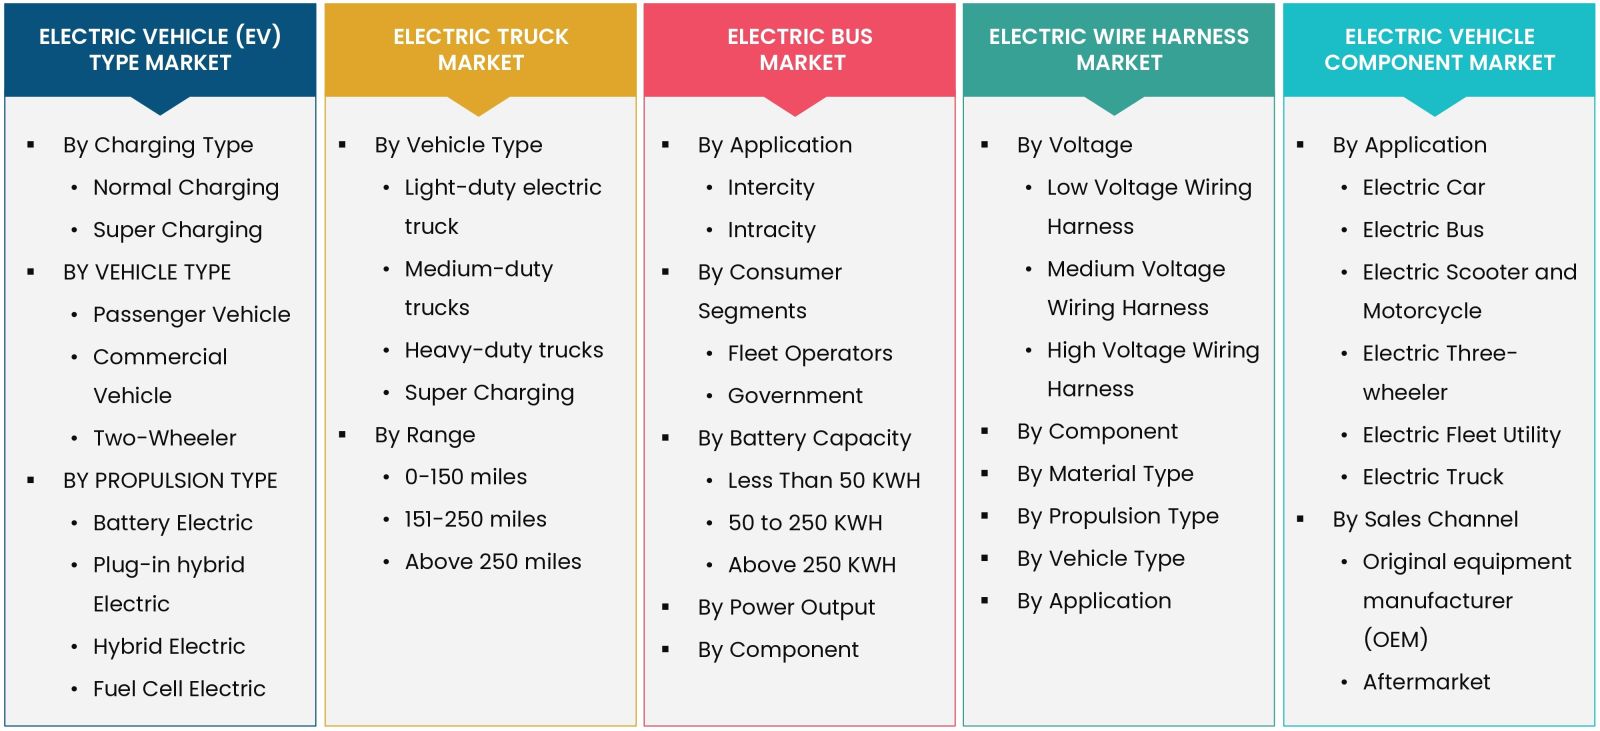 Electric Vehicle Market Segmentation